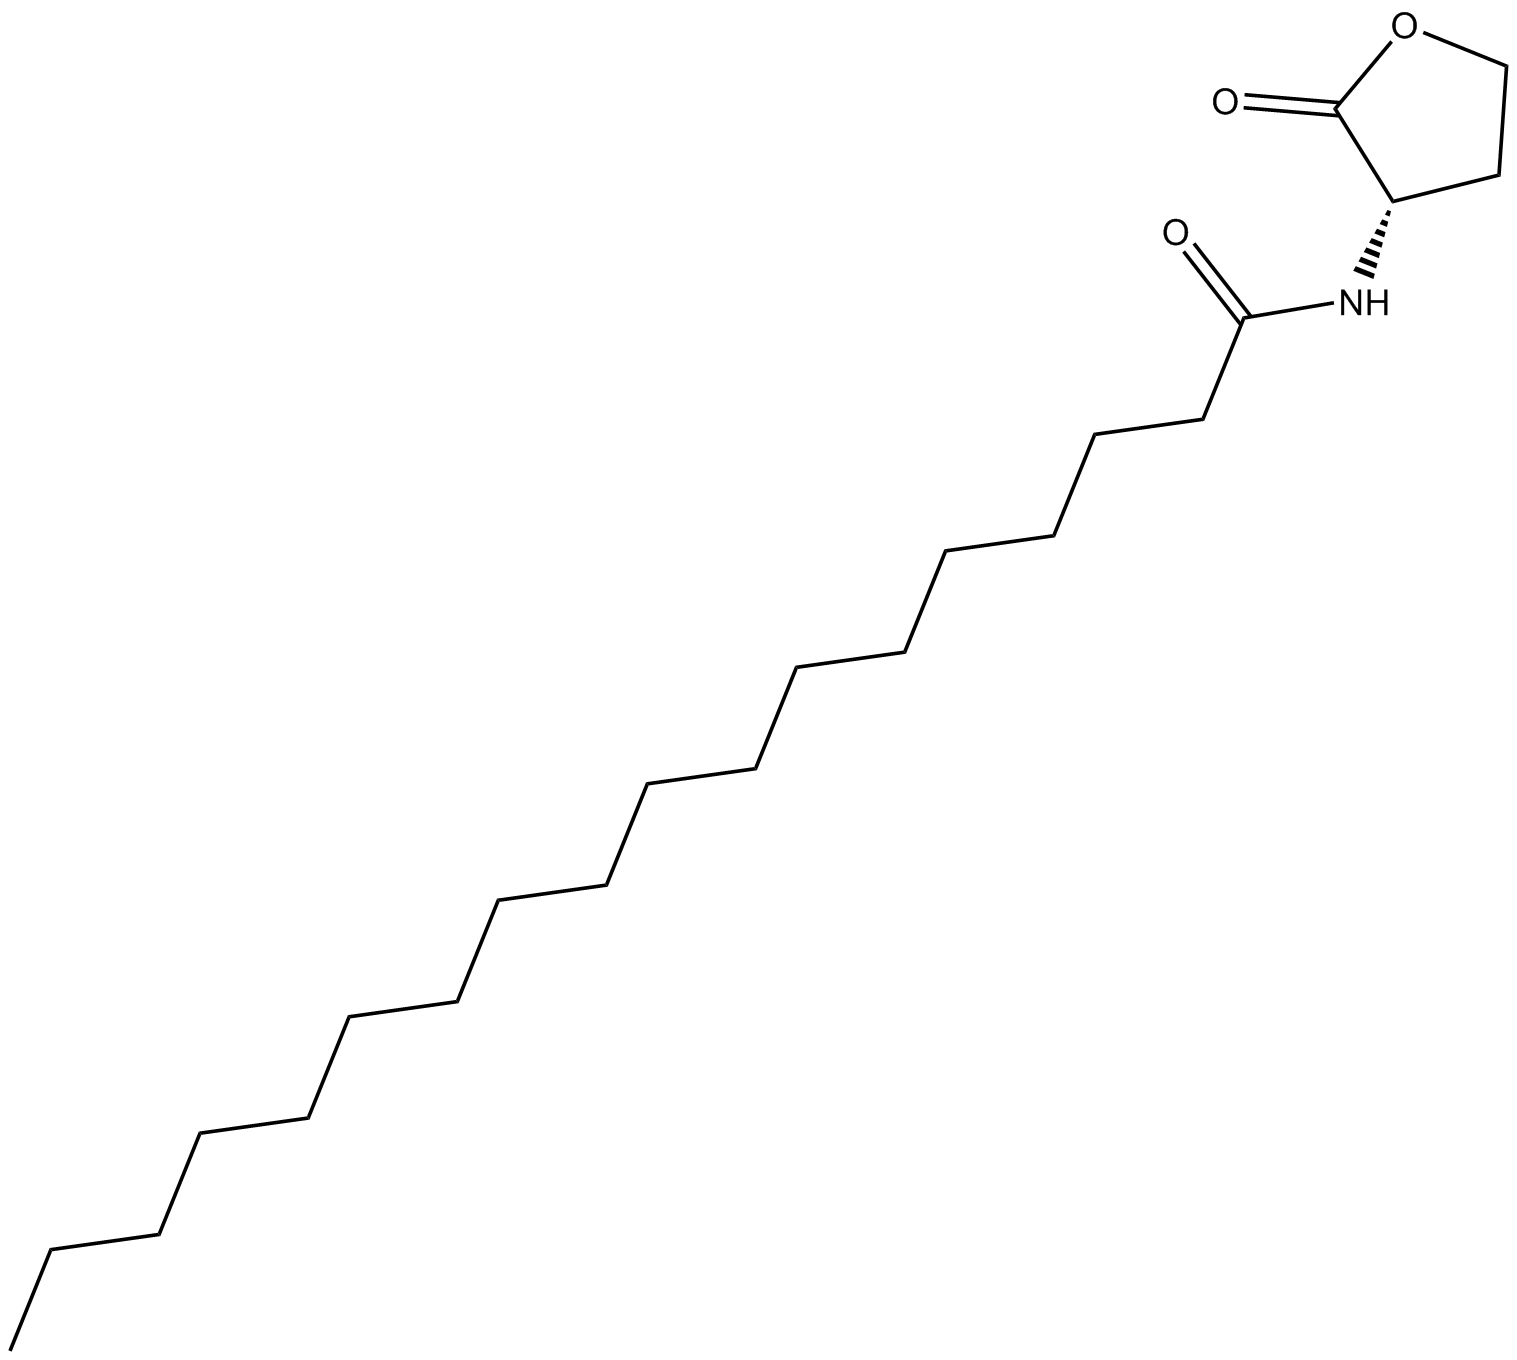 N-octadecanoyl-L-Homoserine lactone